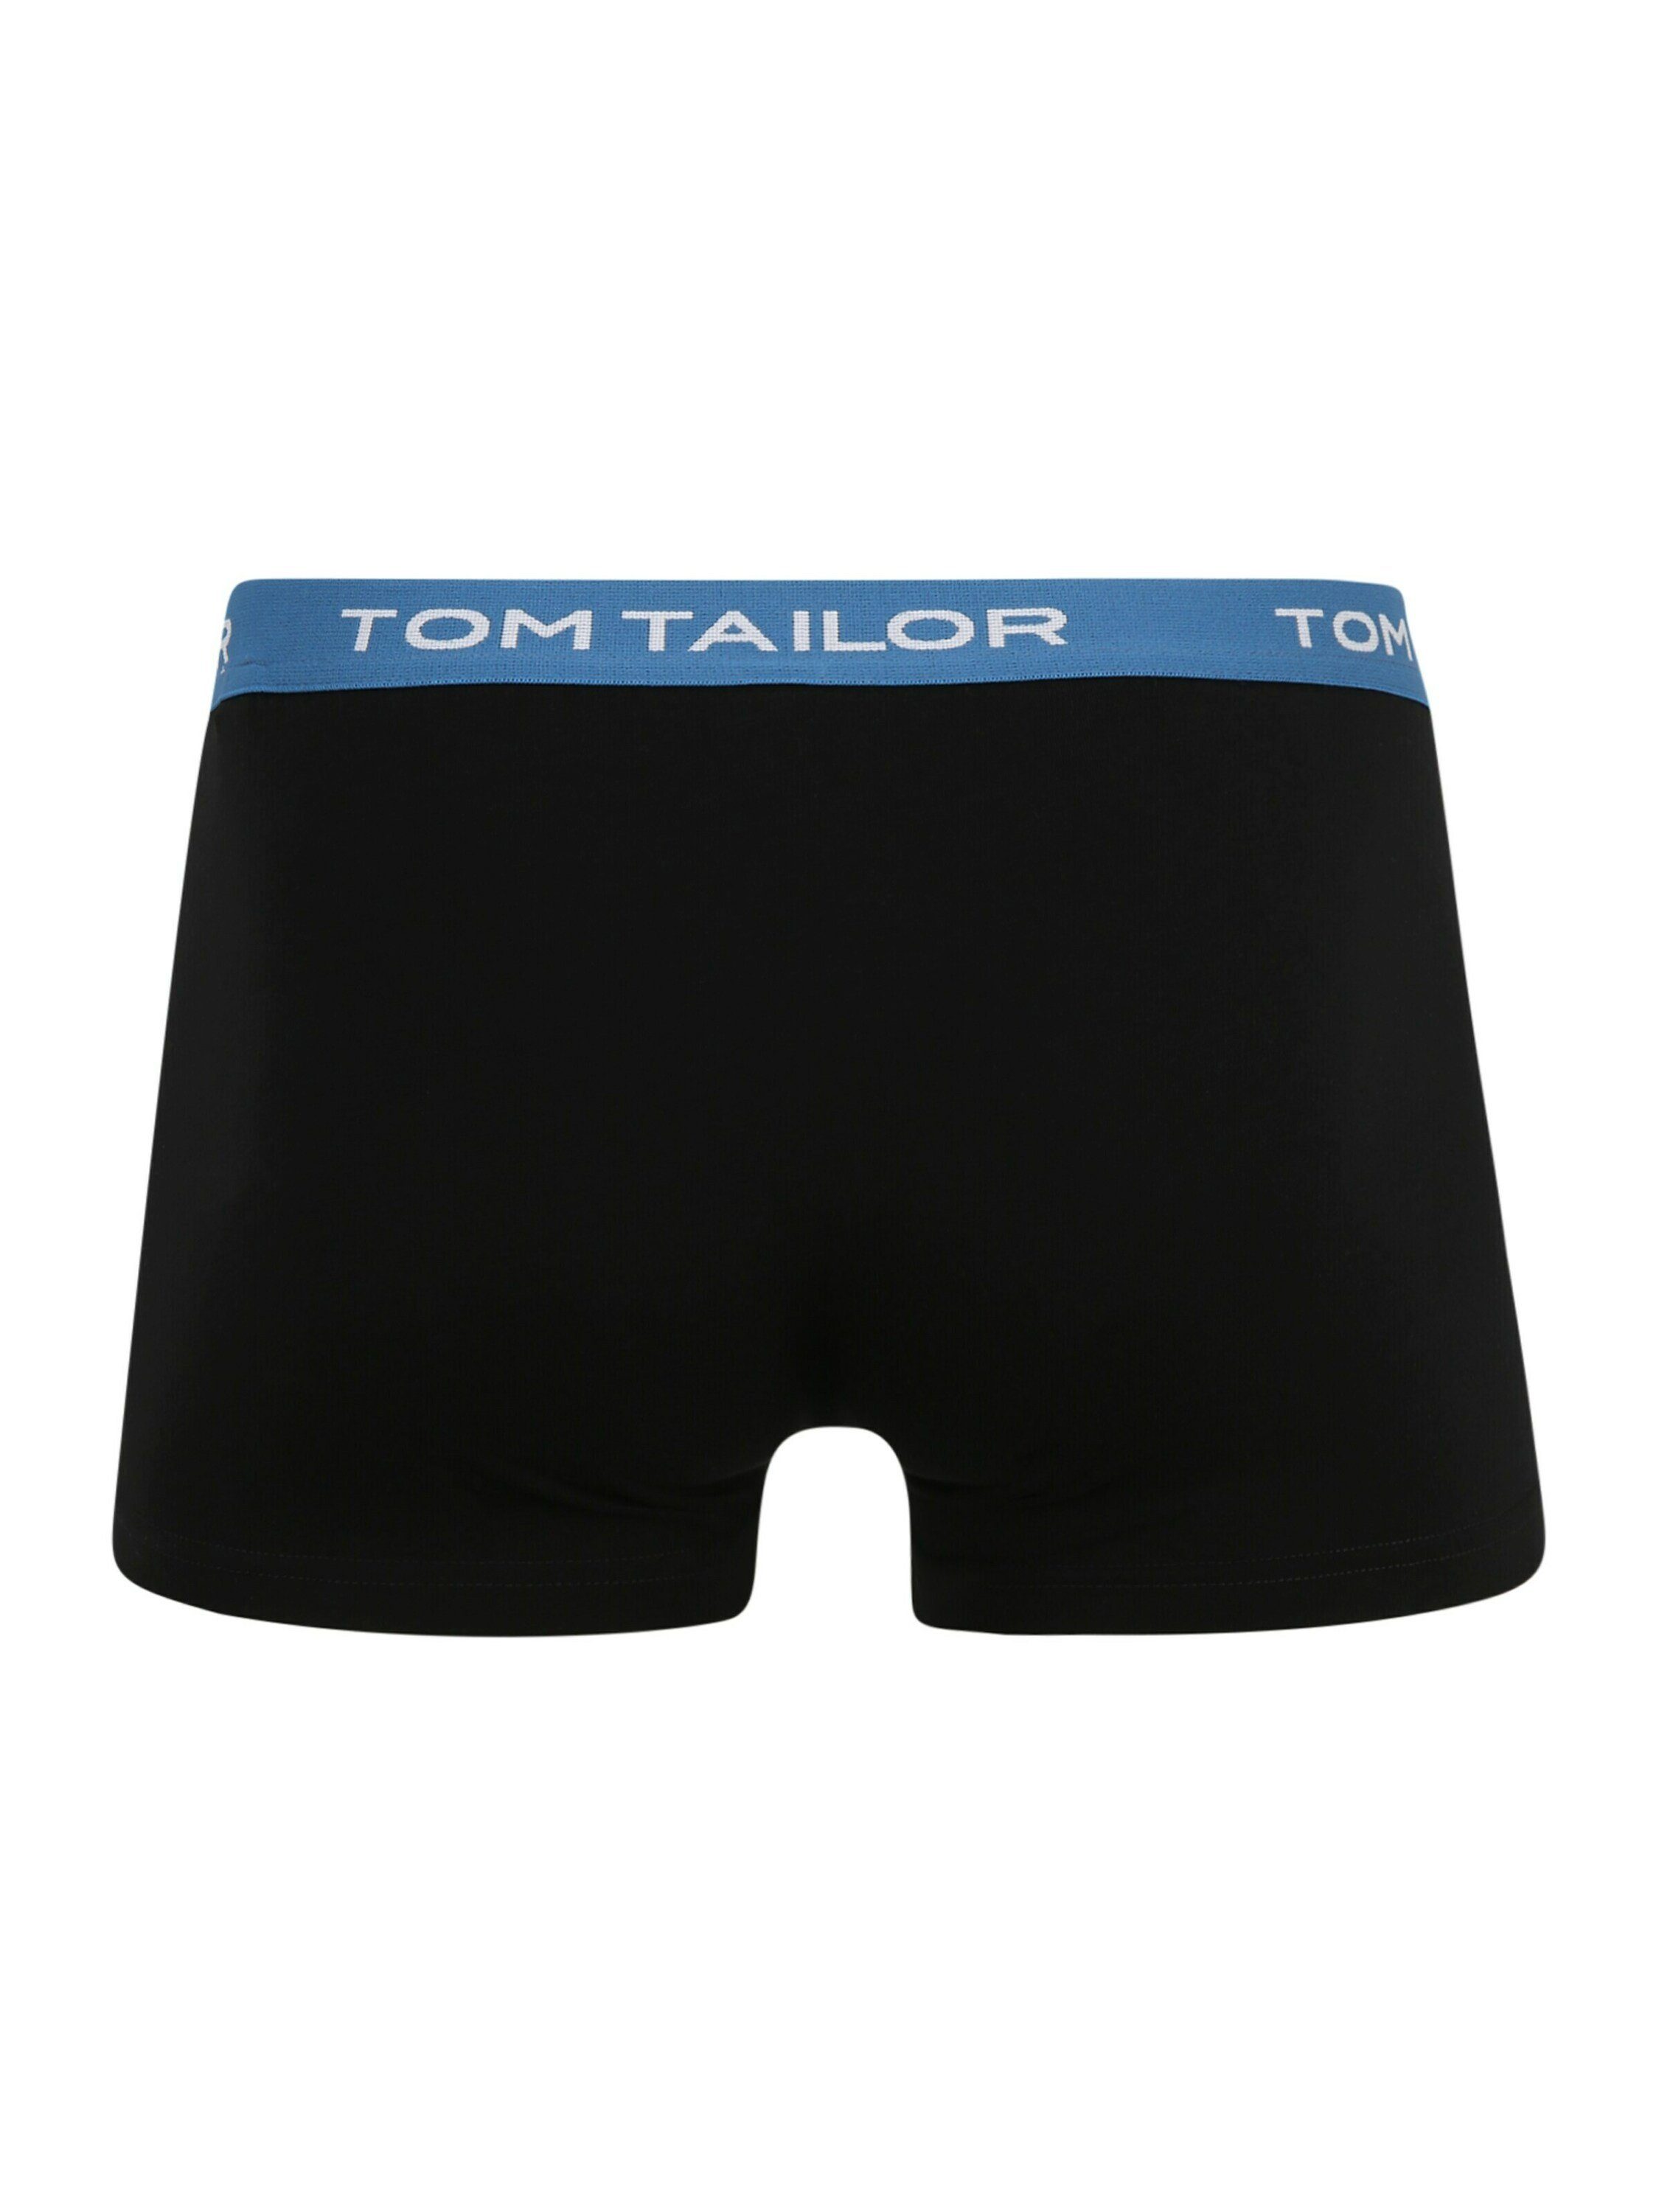 TAILOR Boxershorts (3-St) schwarz-dunkel-uni TOM